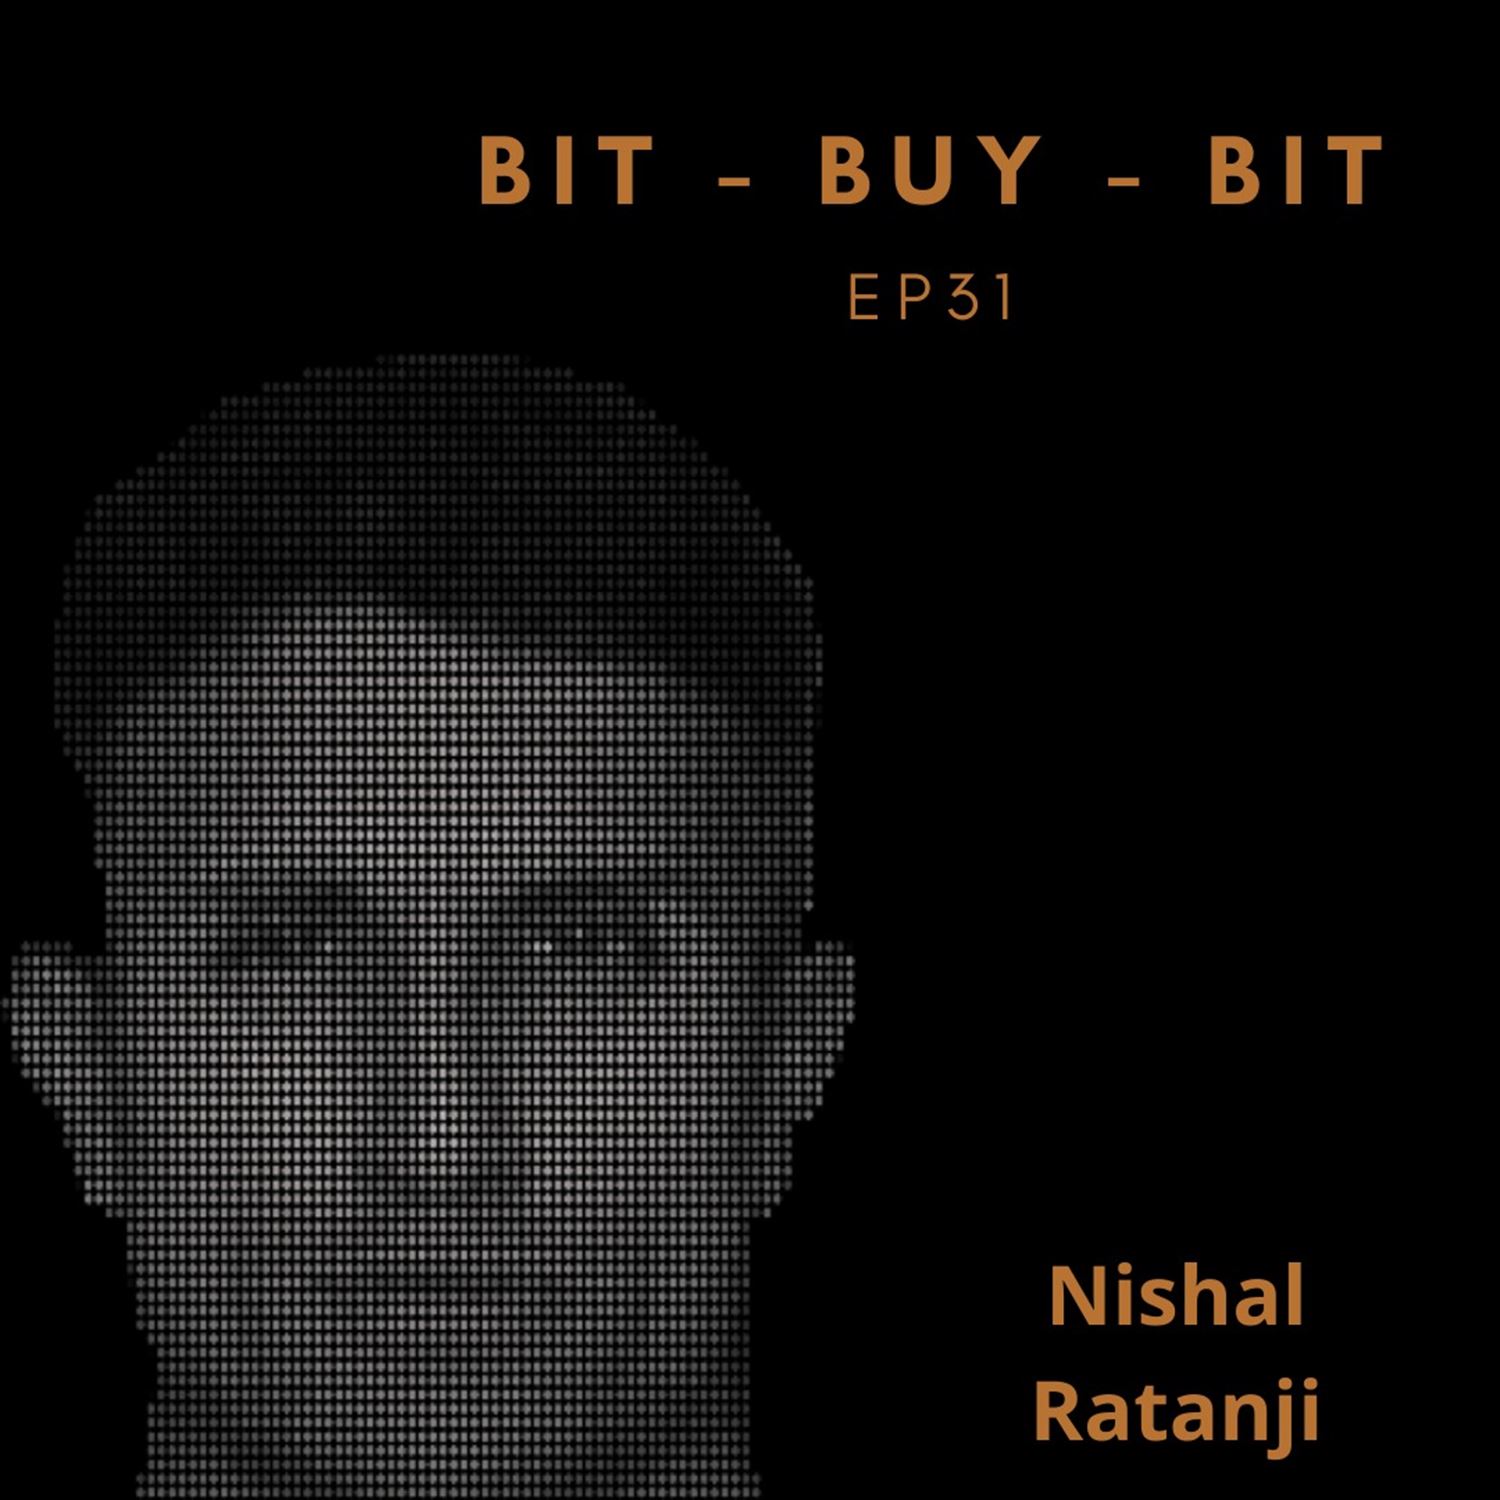 EP31 Bitcoin podcast with Nishal Ratanji.